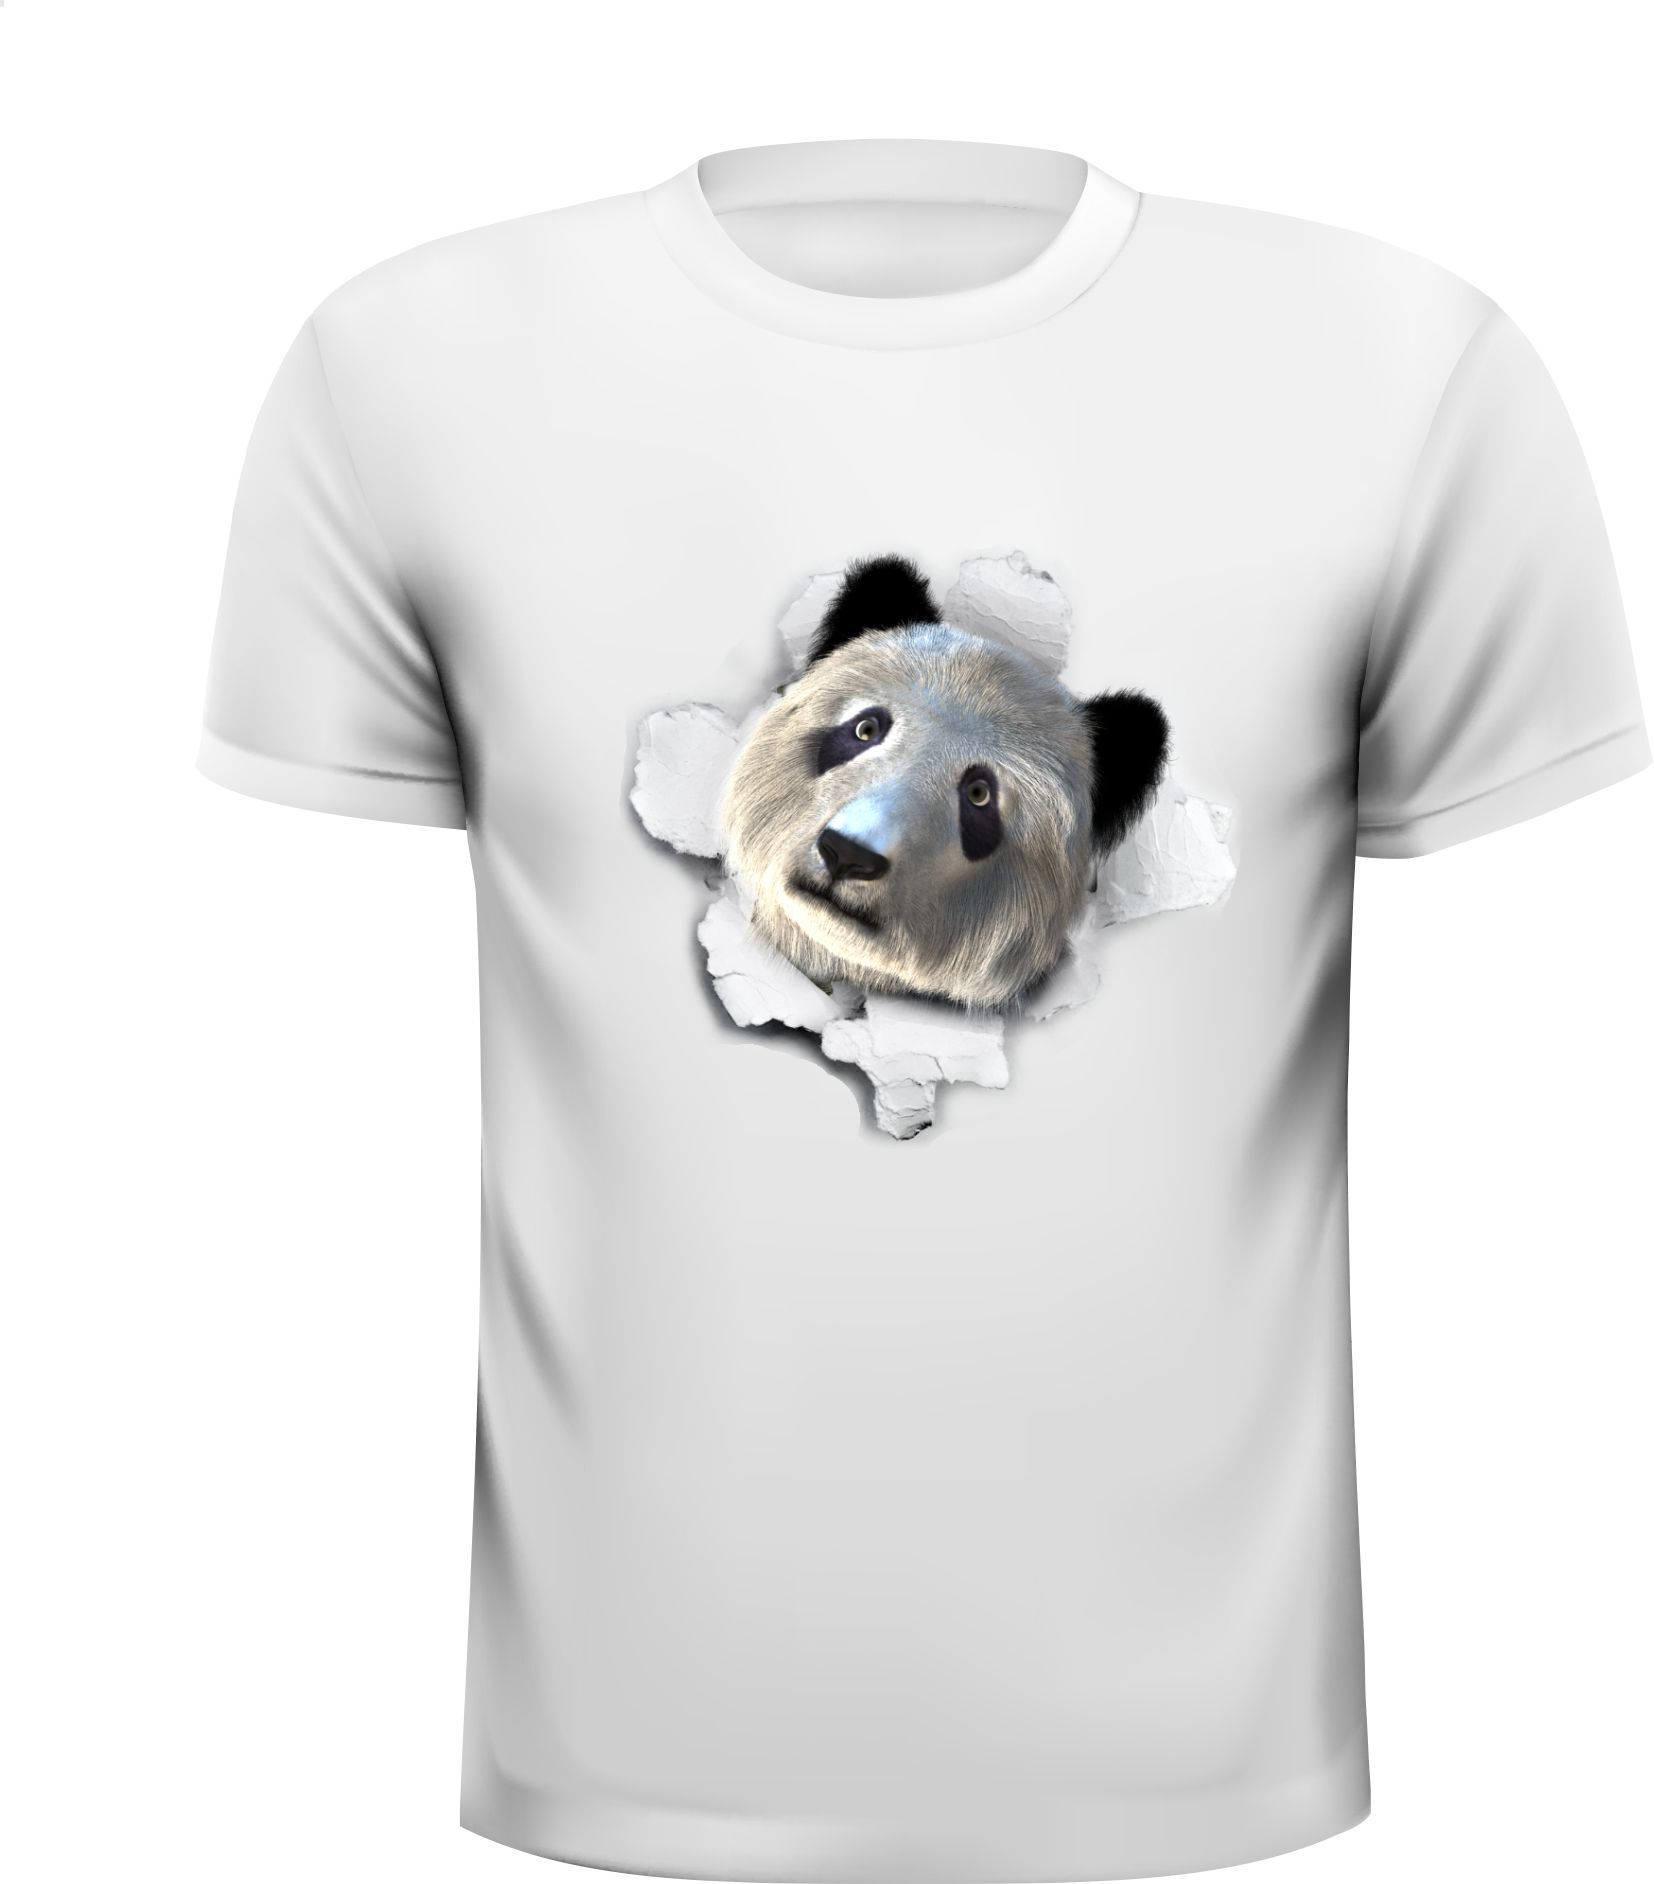 T-shirt kop hoofd panda uit shirt stekend kruipend